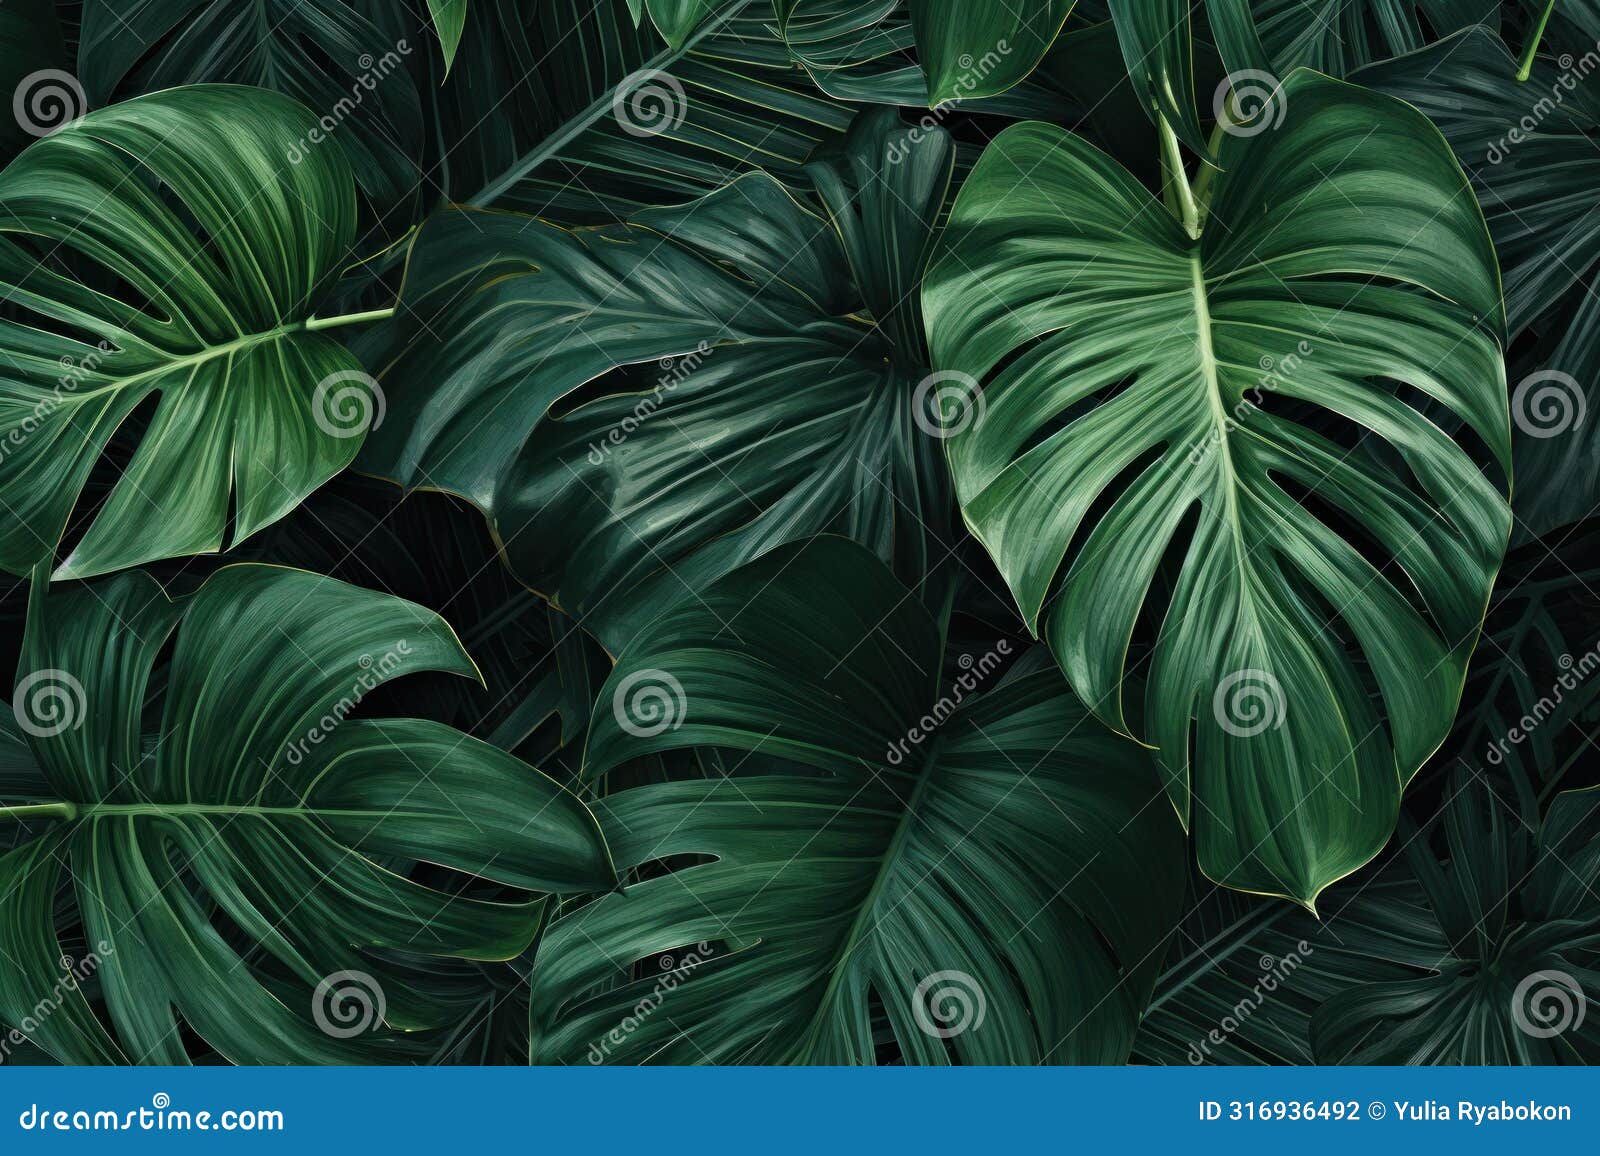 sprawling palm leaves tropical plants. generate ai